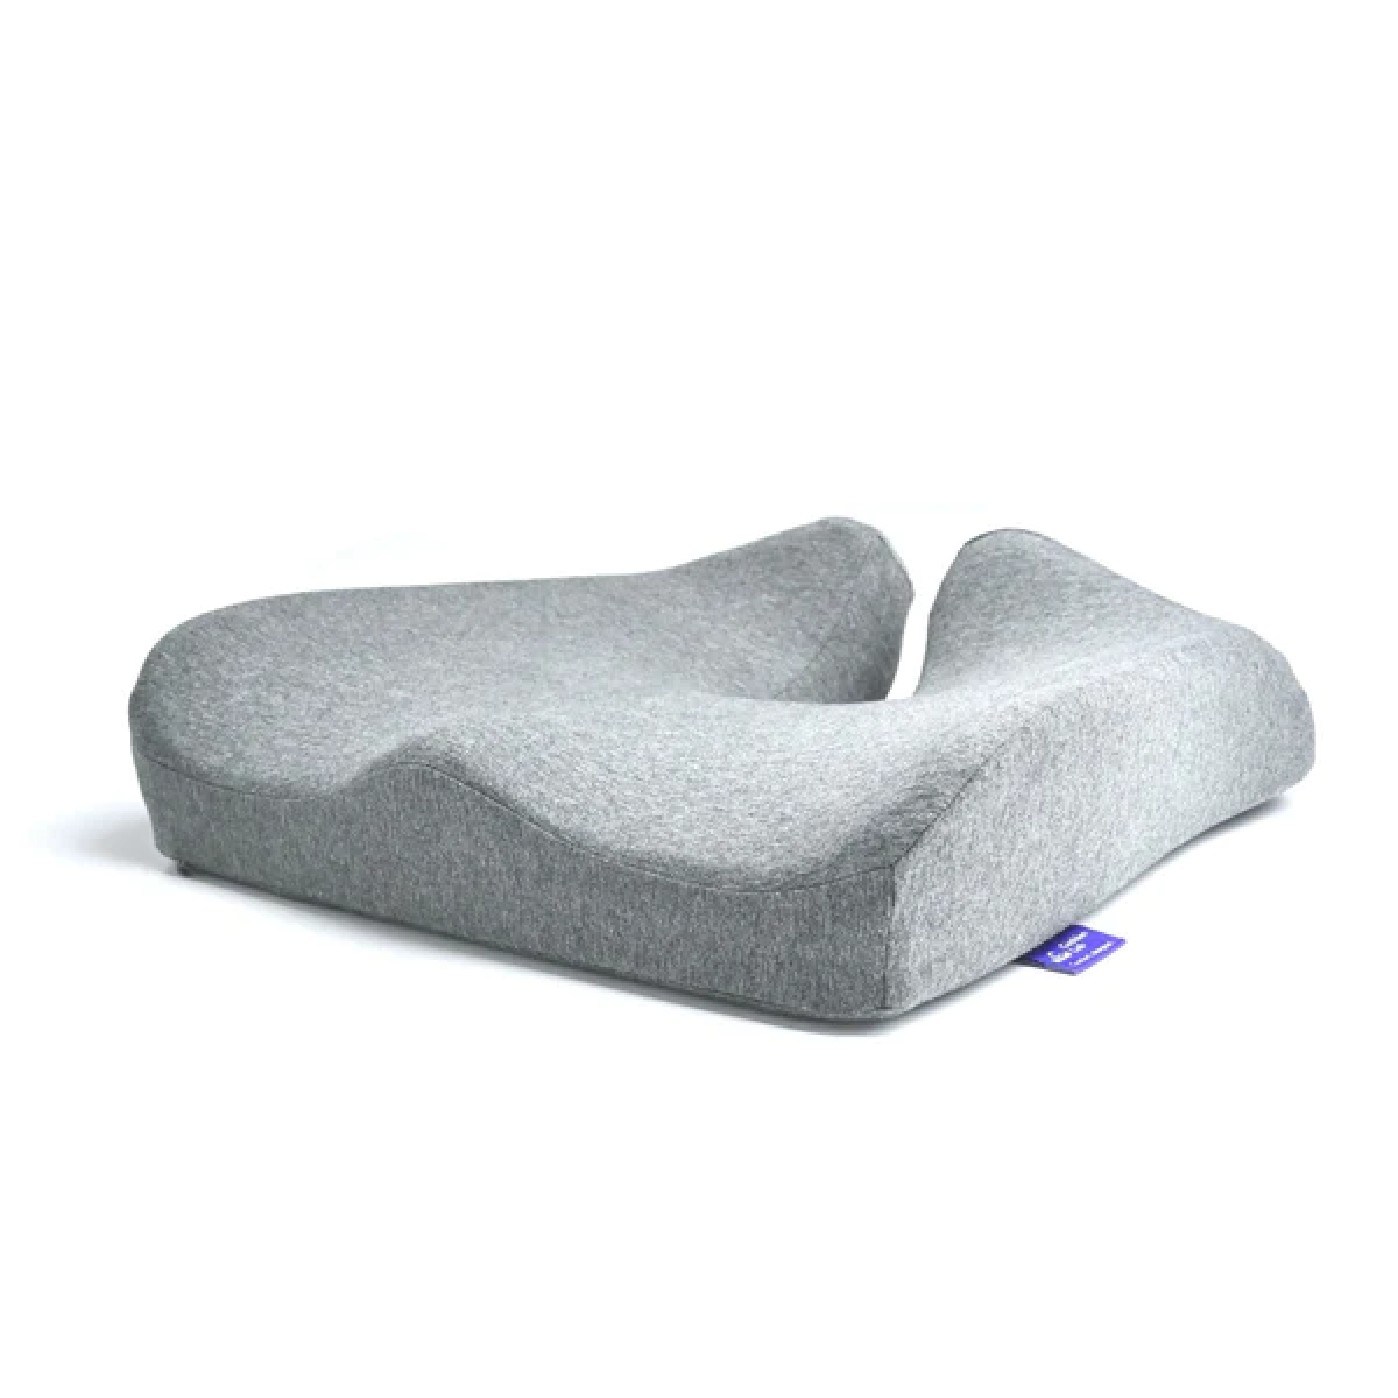 https://cdn.bestreviews.com/images/v4desktop/product-matrix/best-ergonomic-seat-cushions-cushion-labn.jpg